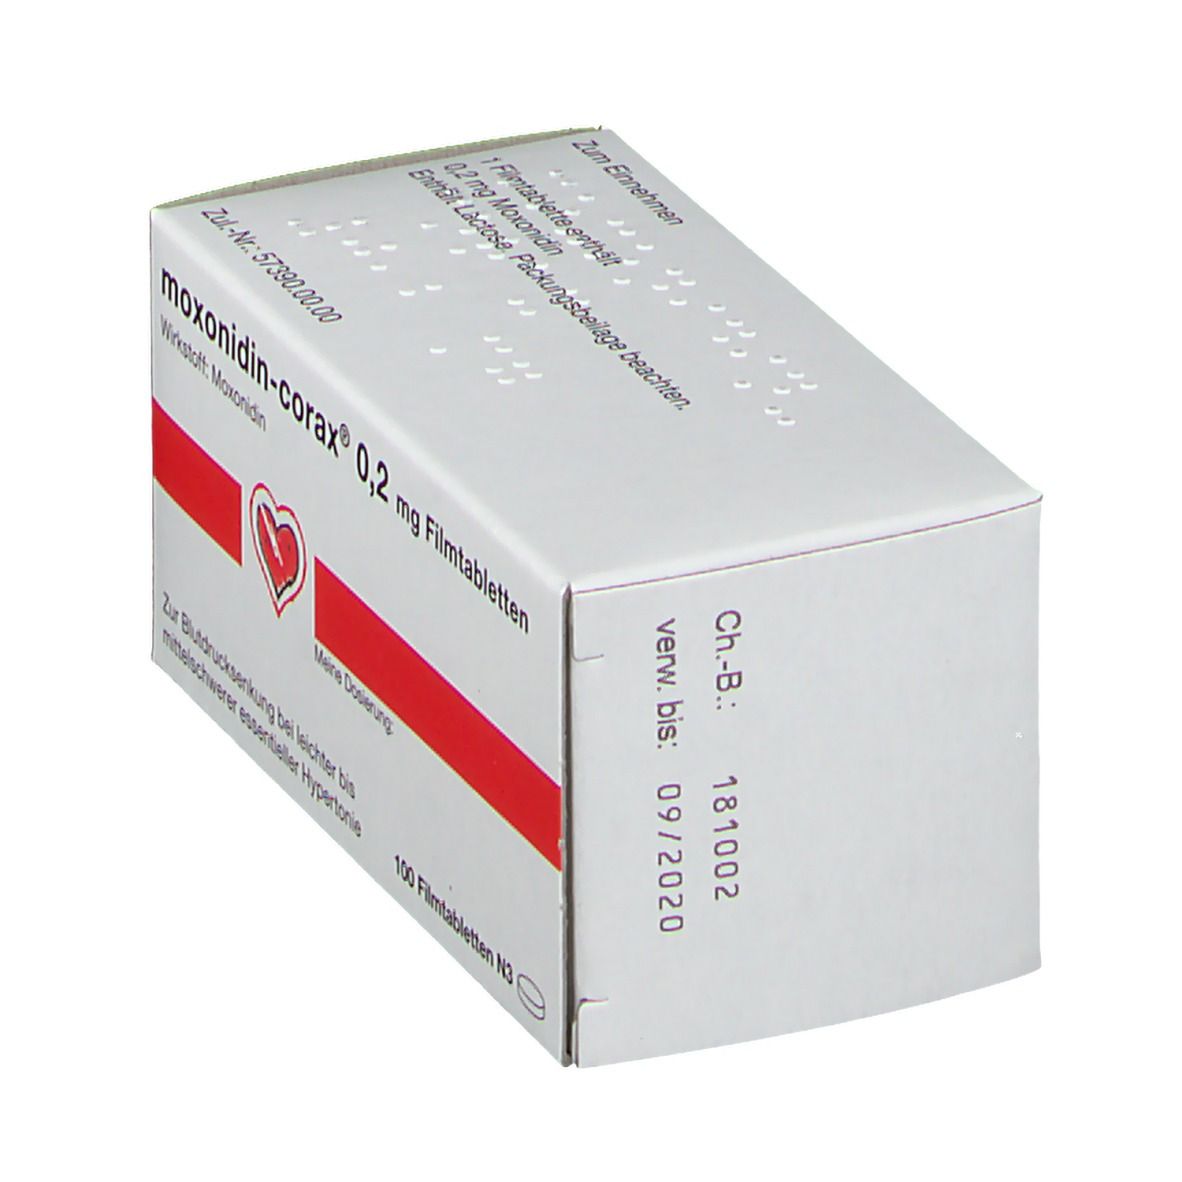 moxonidin-corax® 0,2 mg